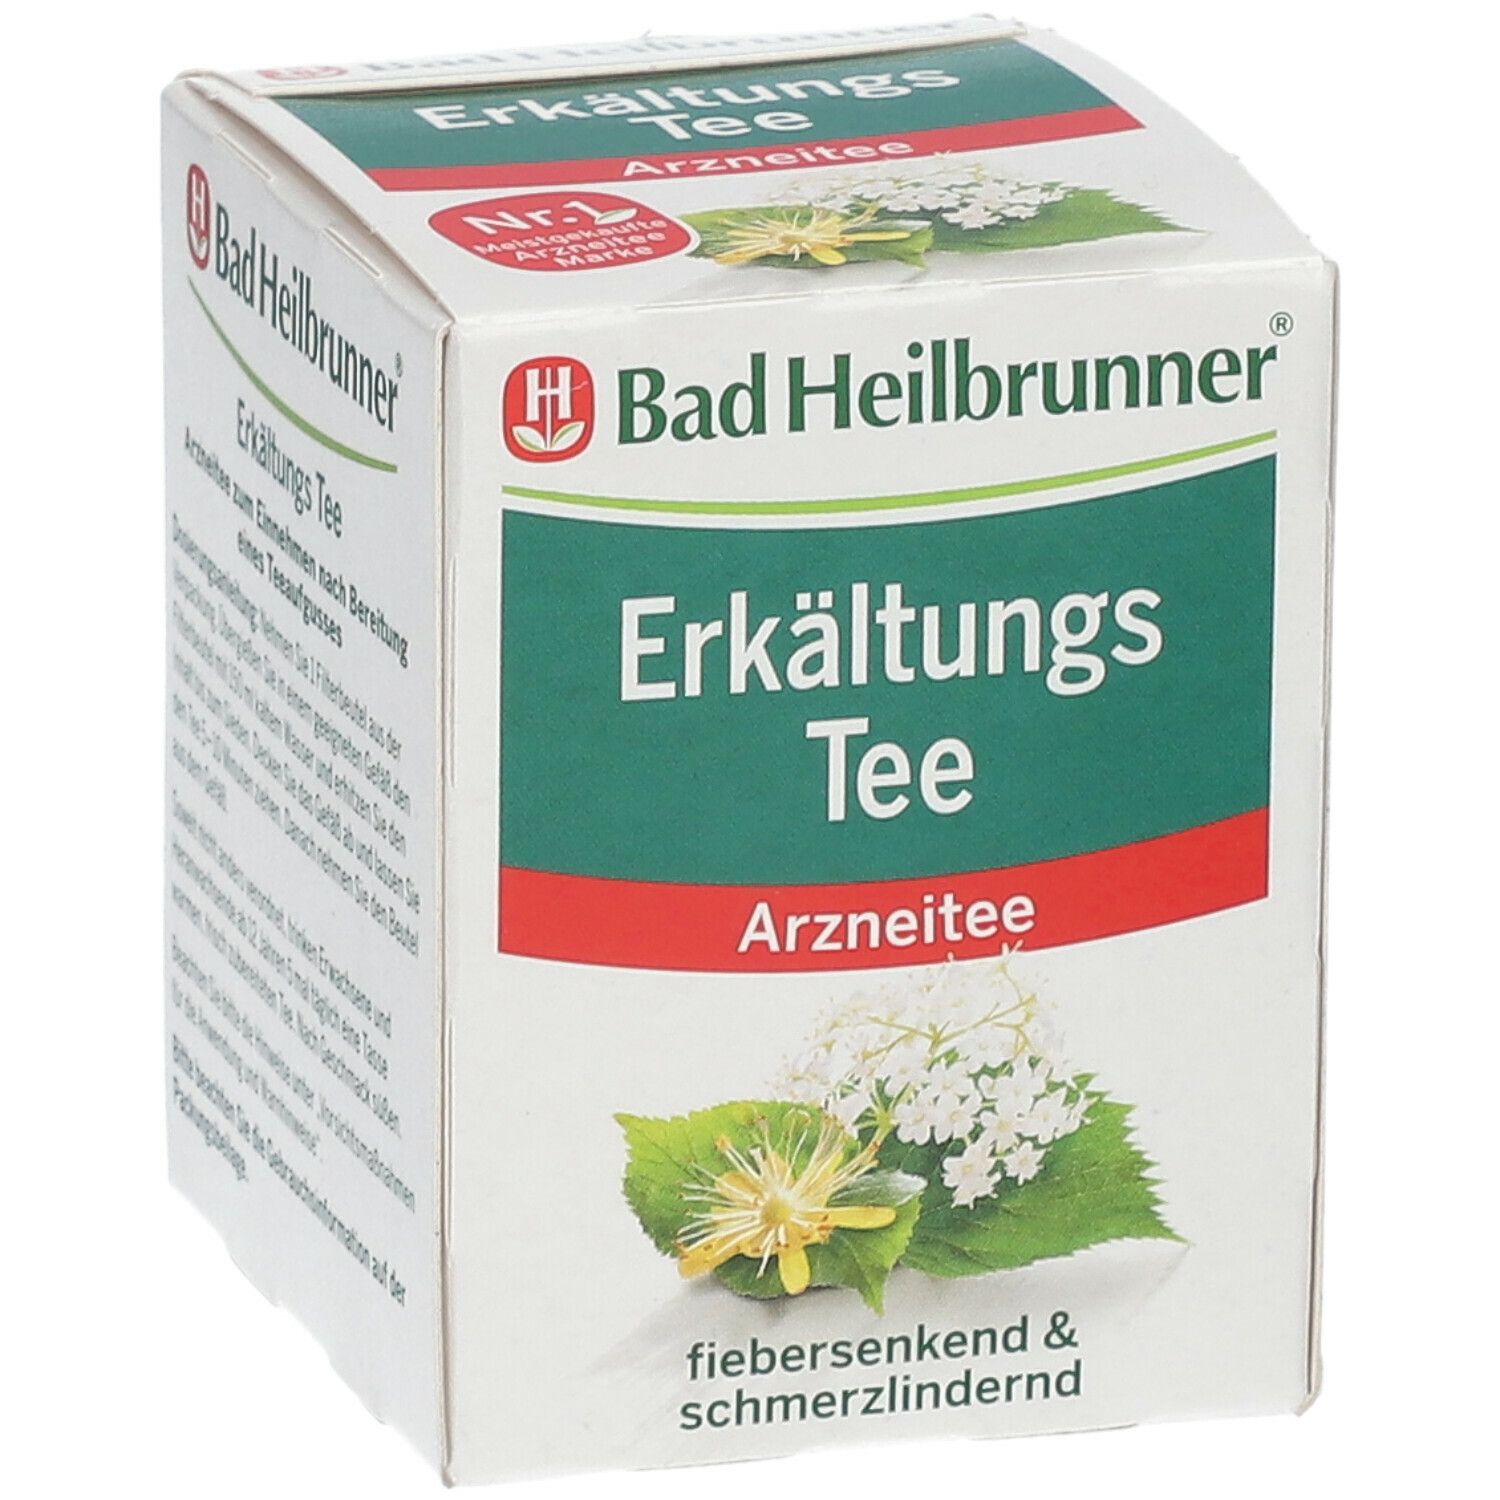 Bad Heilbrunner® Erkältungs Tee